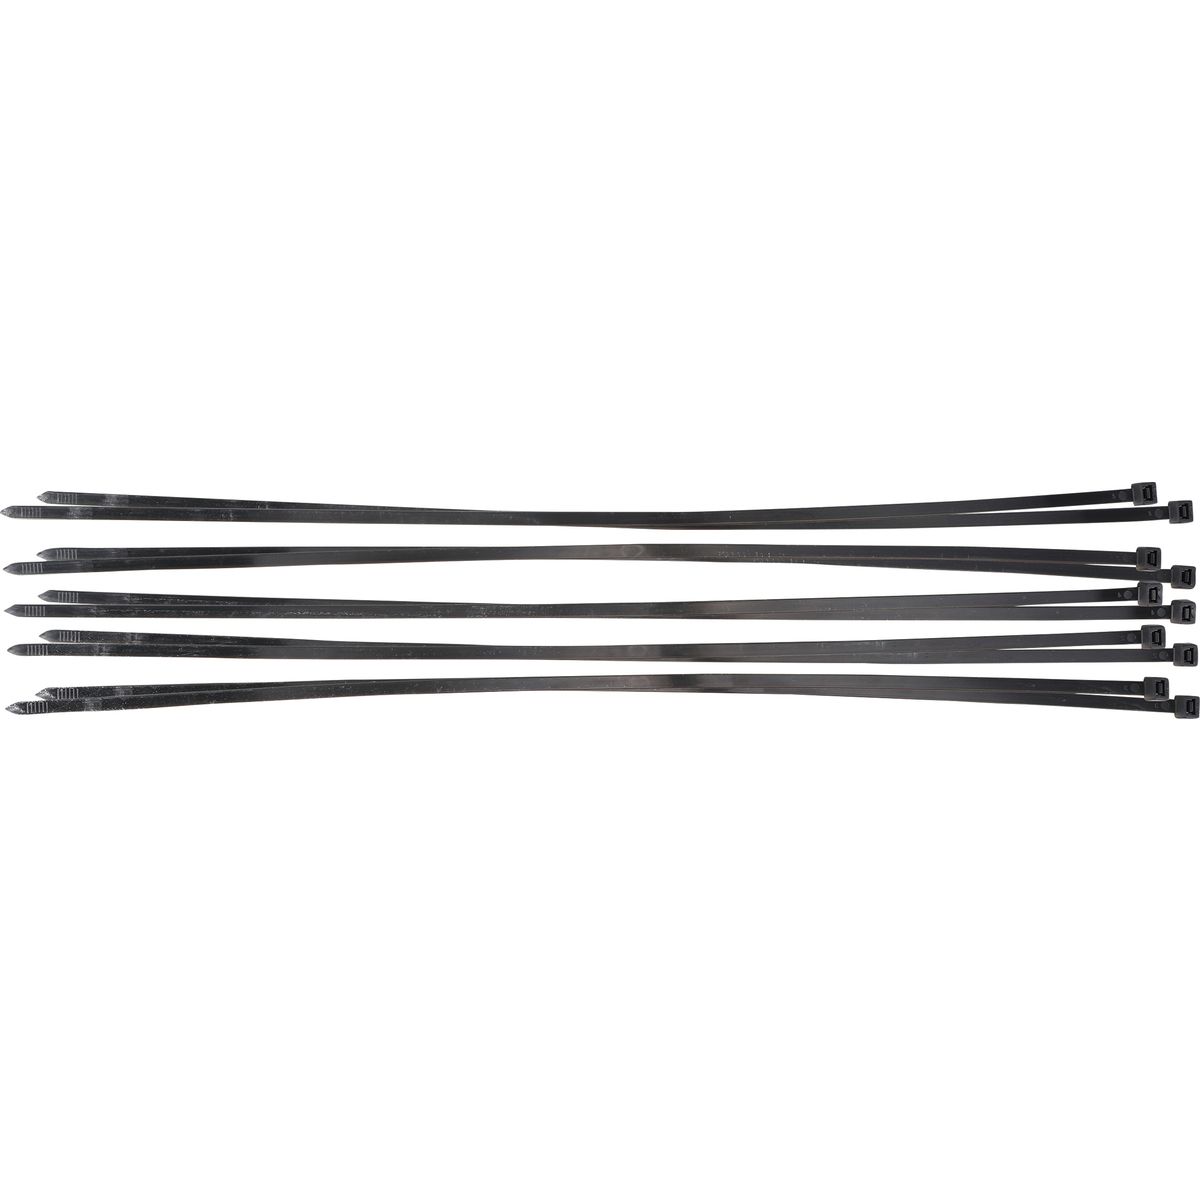 Cable Tie Assortment | black | 8.0 x 700 mm | 10 pcs.